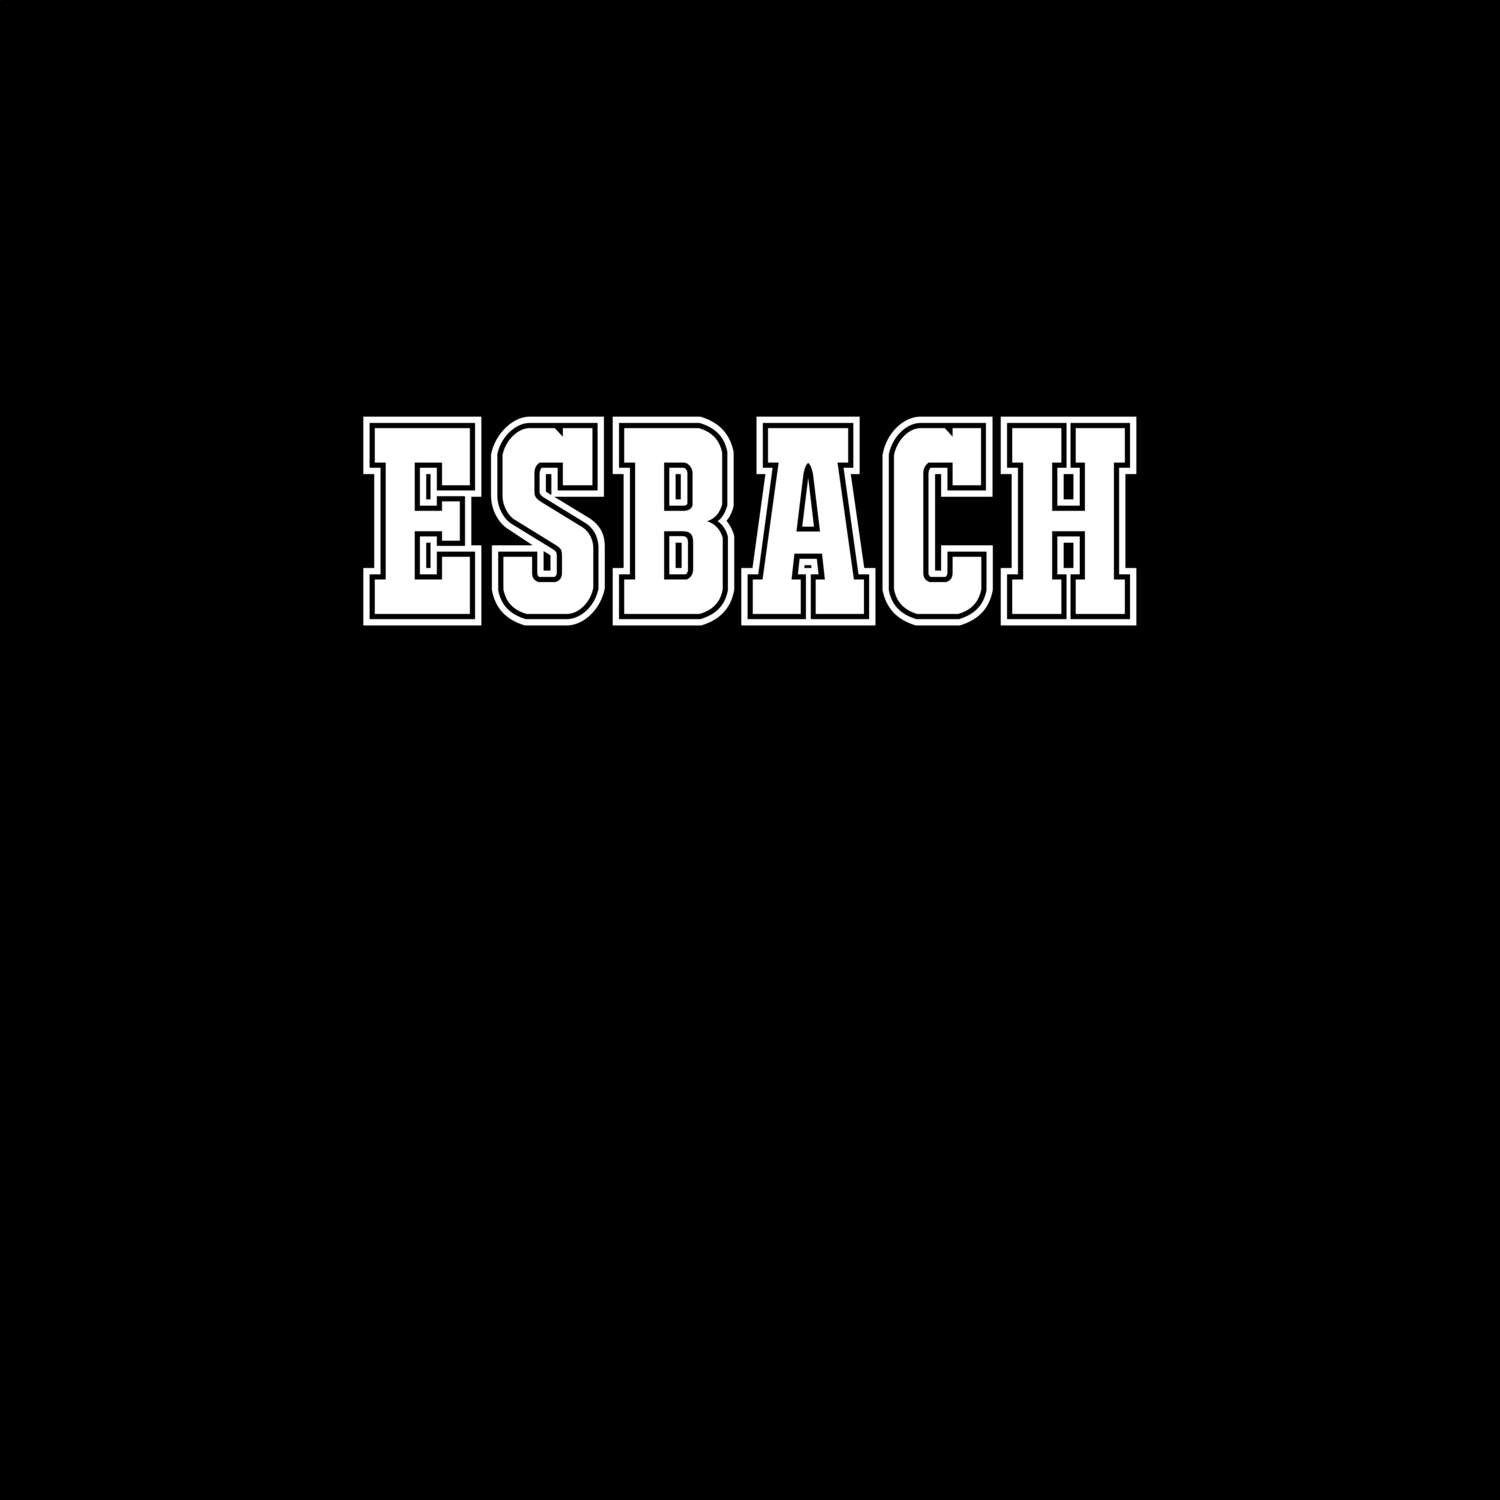 Esbach T-Shirt »Classic«